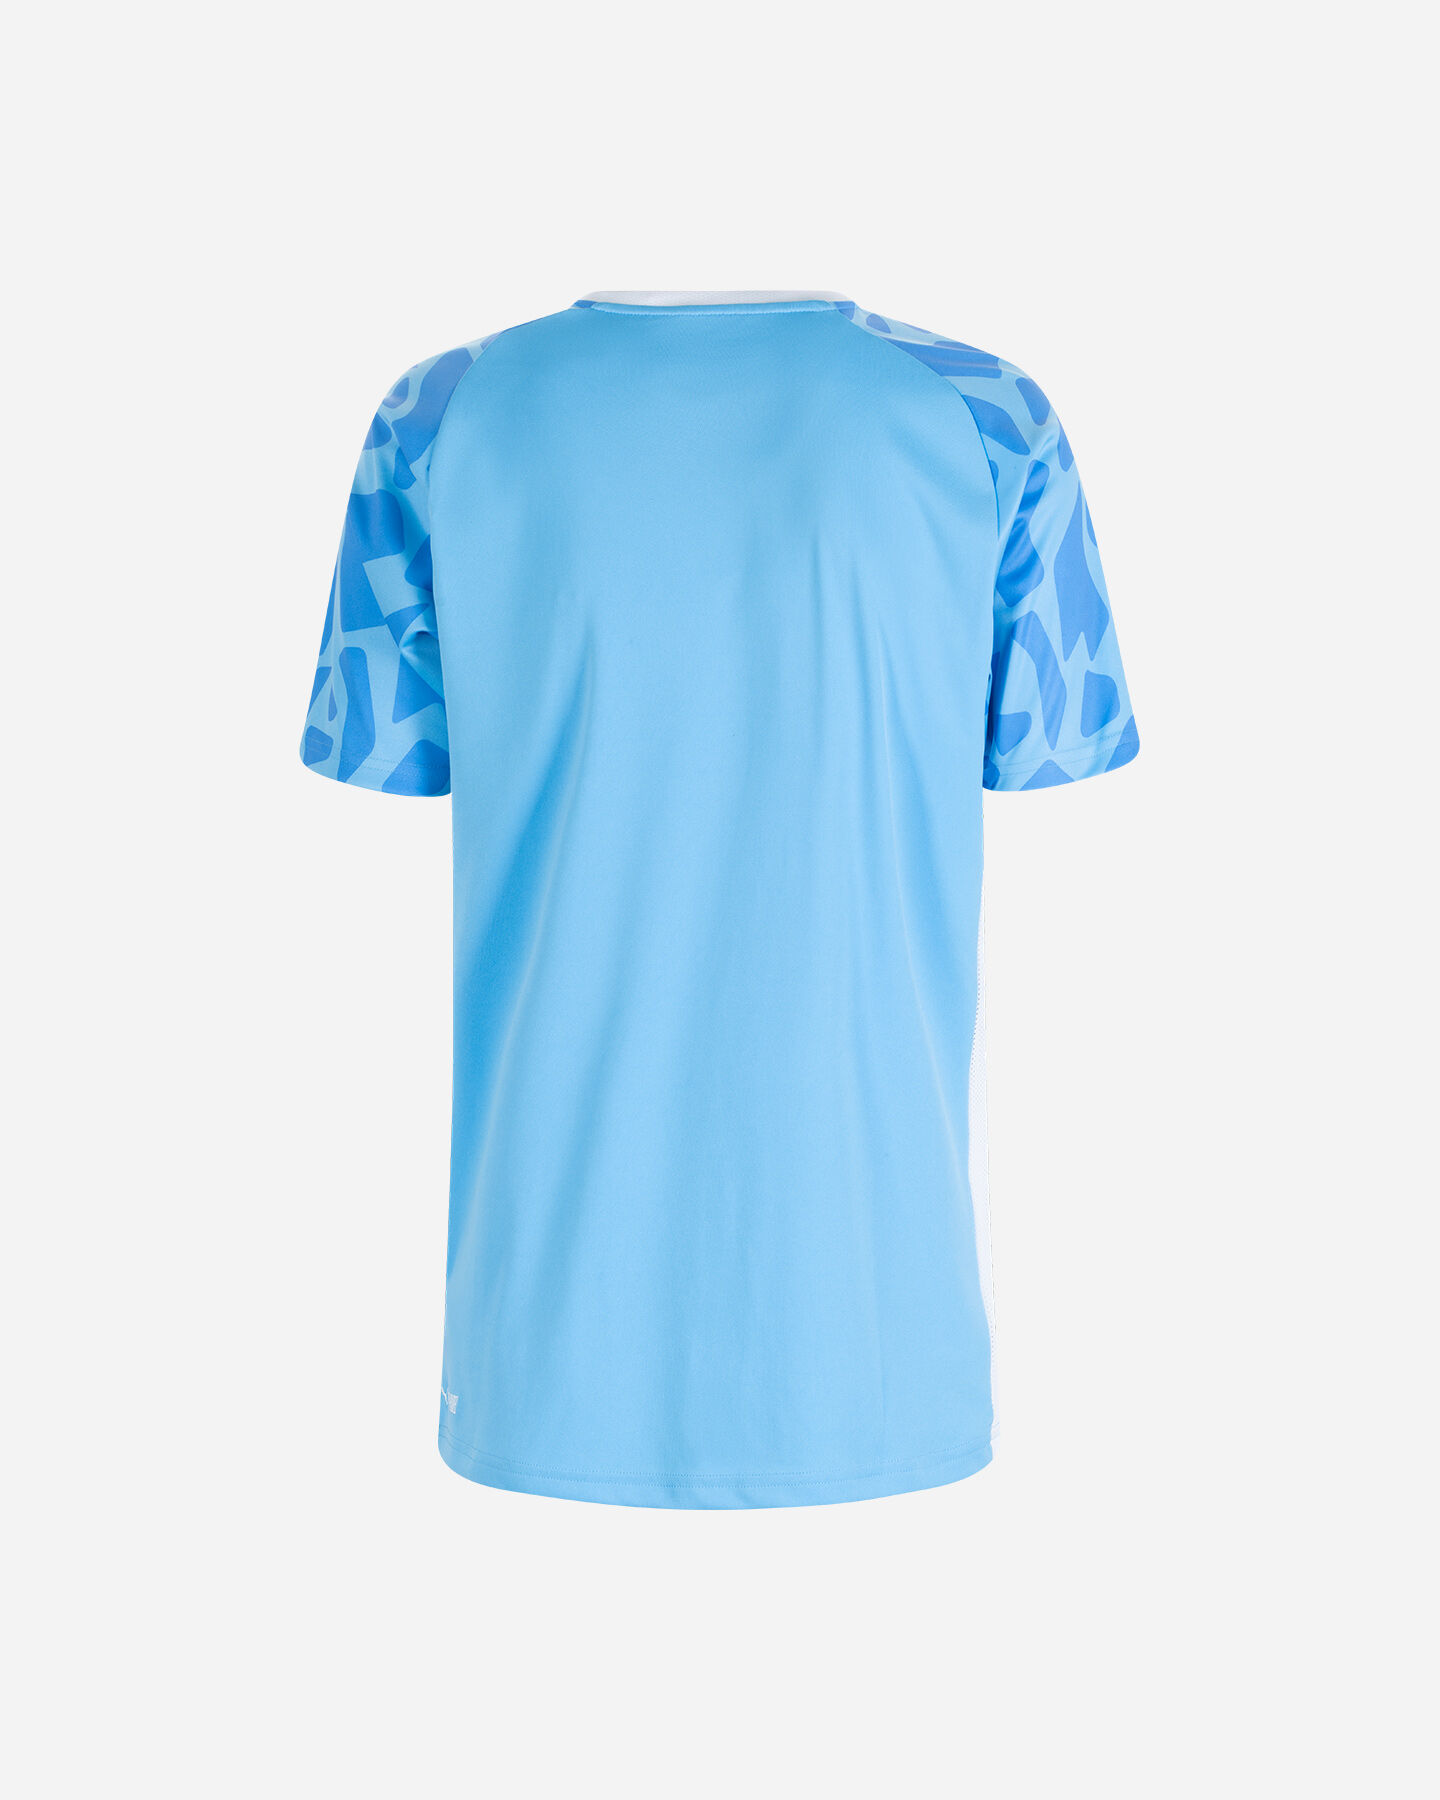  T-Shirt tennis PUMA TEAM LIGA GRAPHIC M S5540182 scatto 1